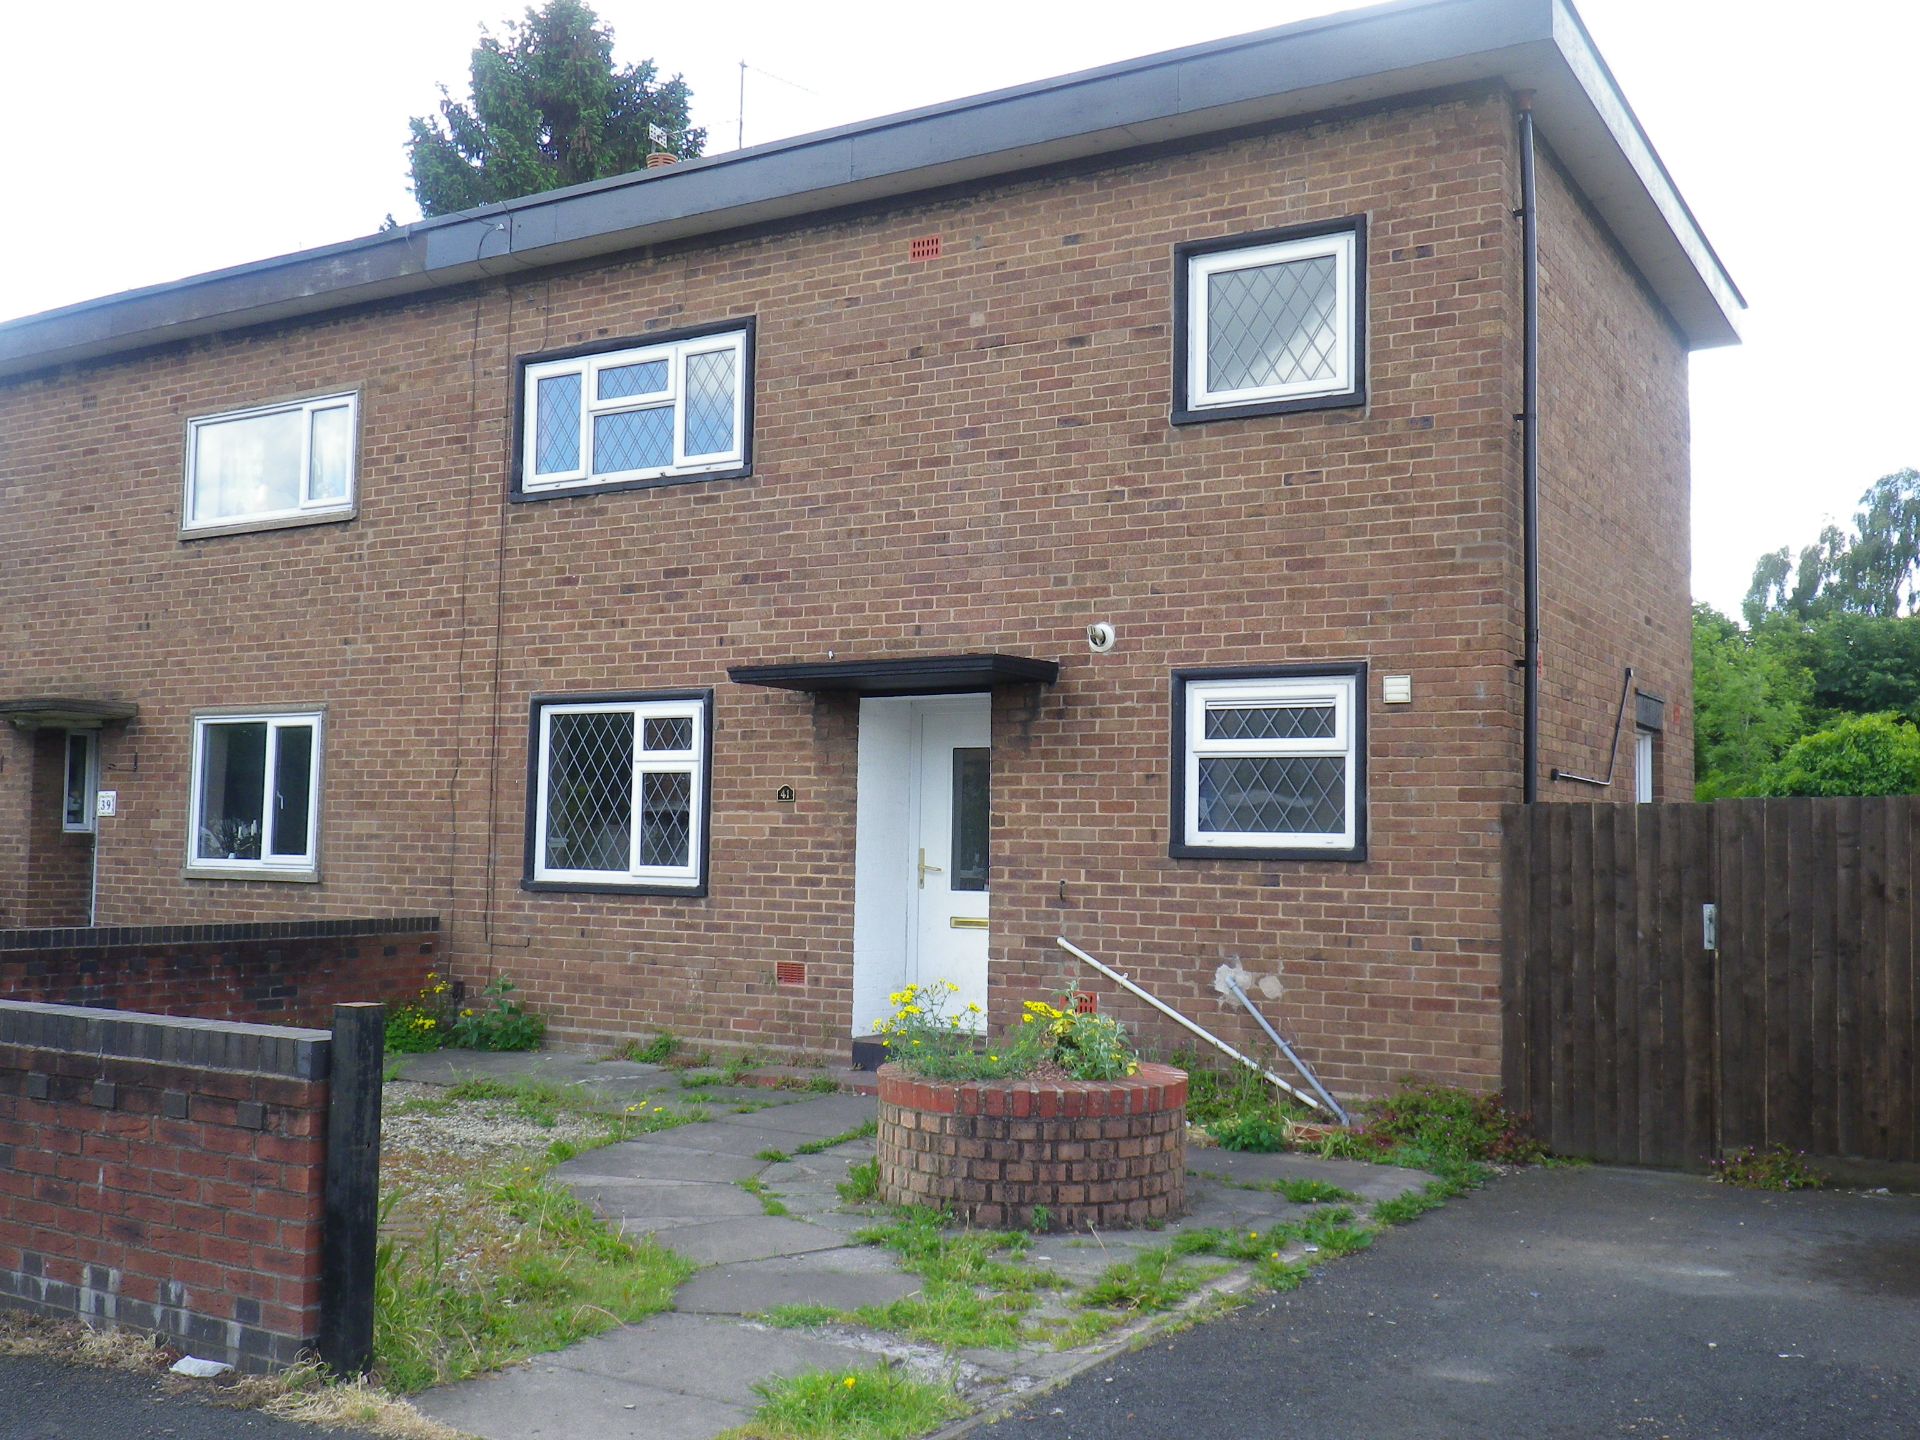 41 James Way, Donnington, Telford, Shropshire, TF2 8AX
 
Semi-detached house
Three bedrooms
In